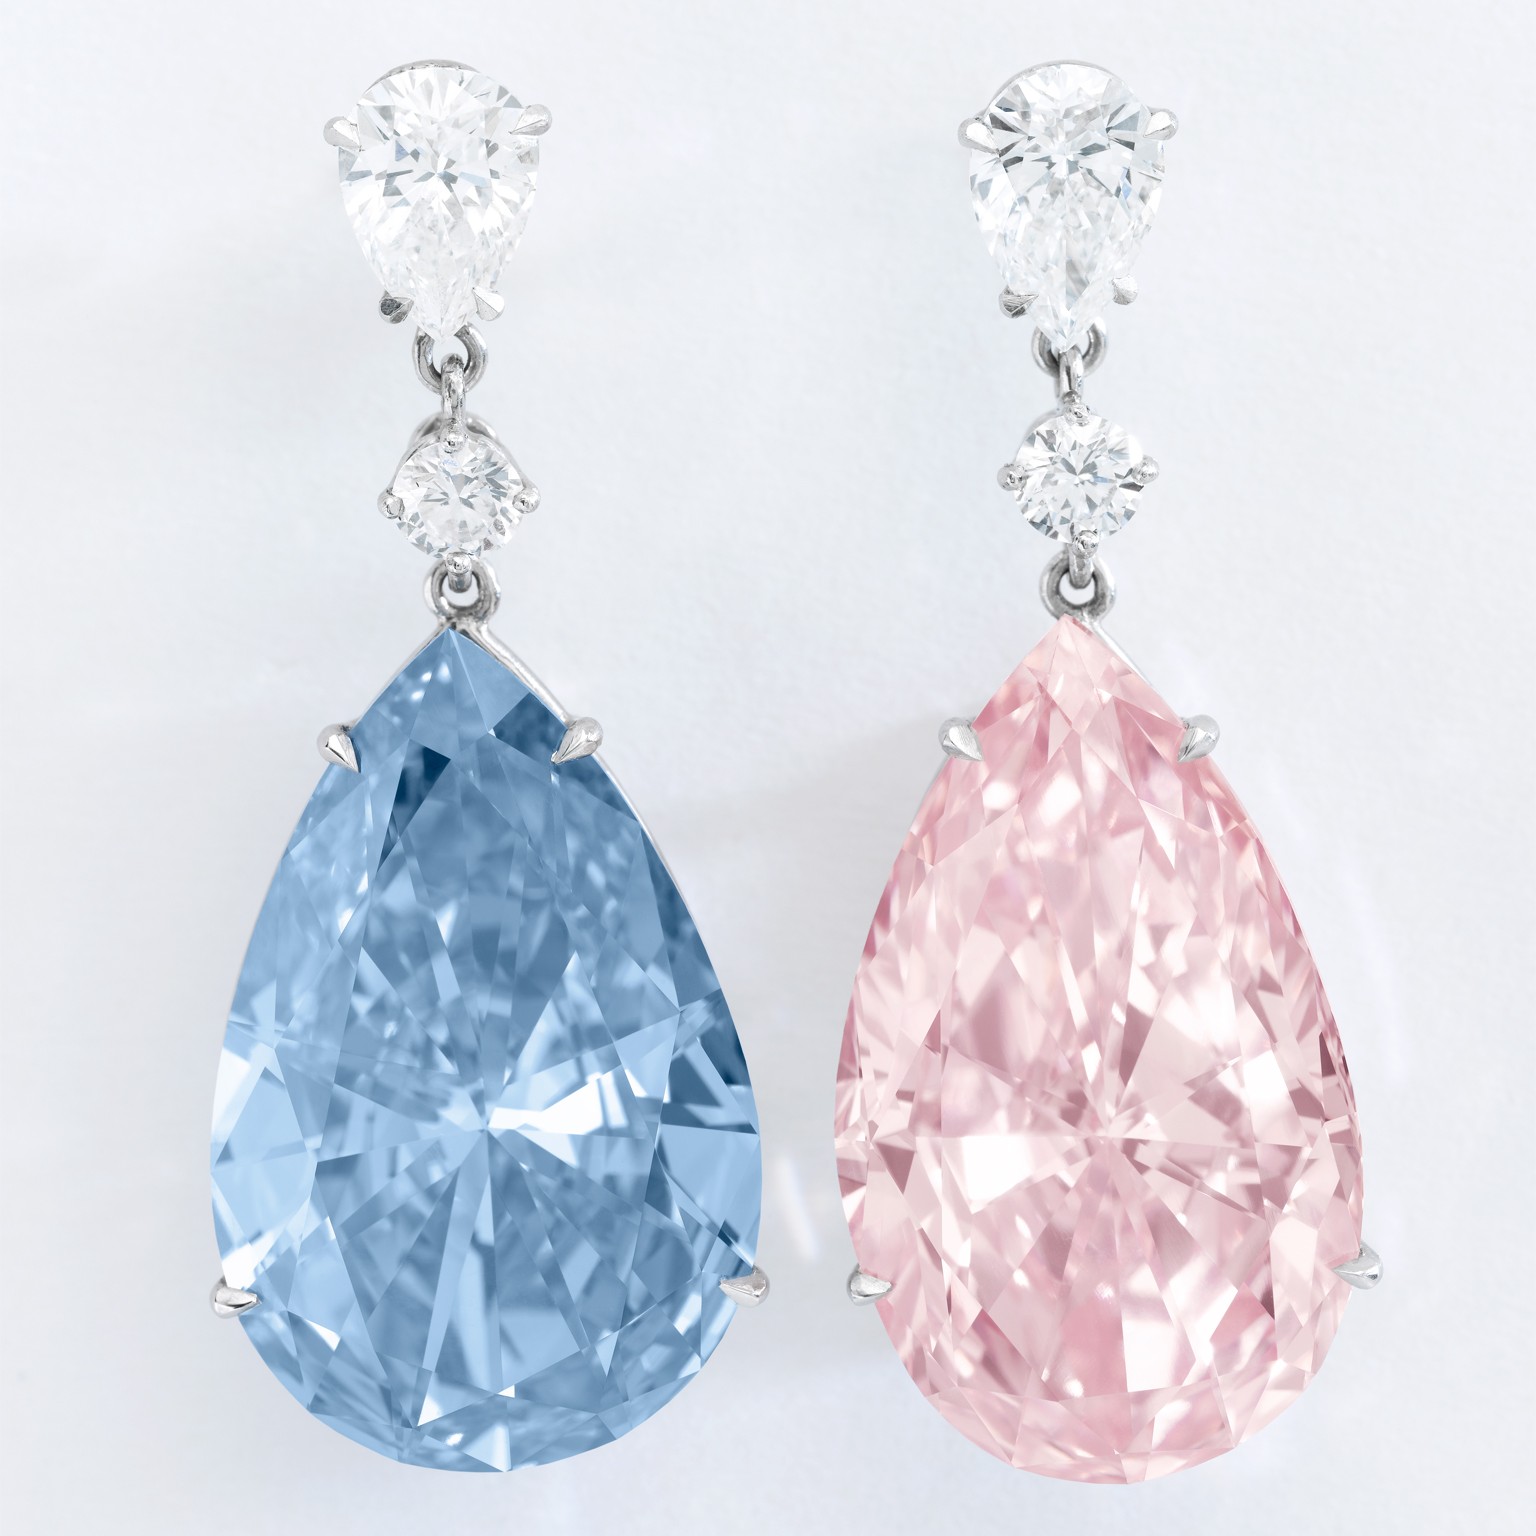 Apollo blue and Artemis pink diamonds.